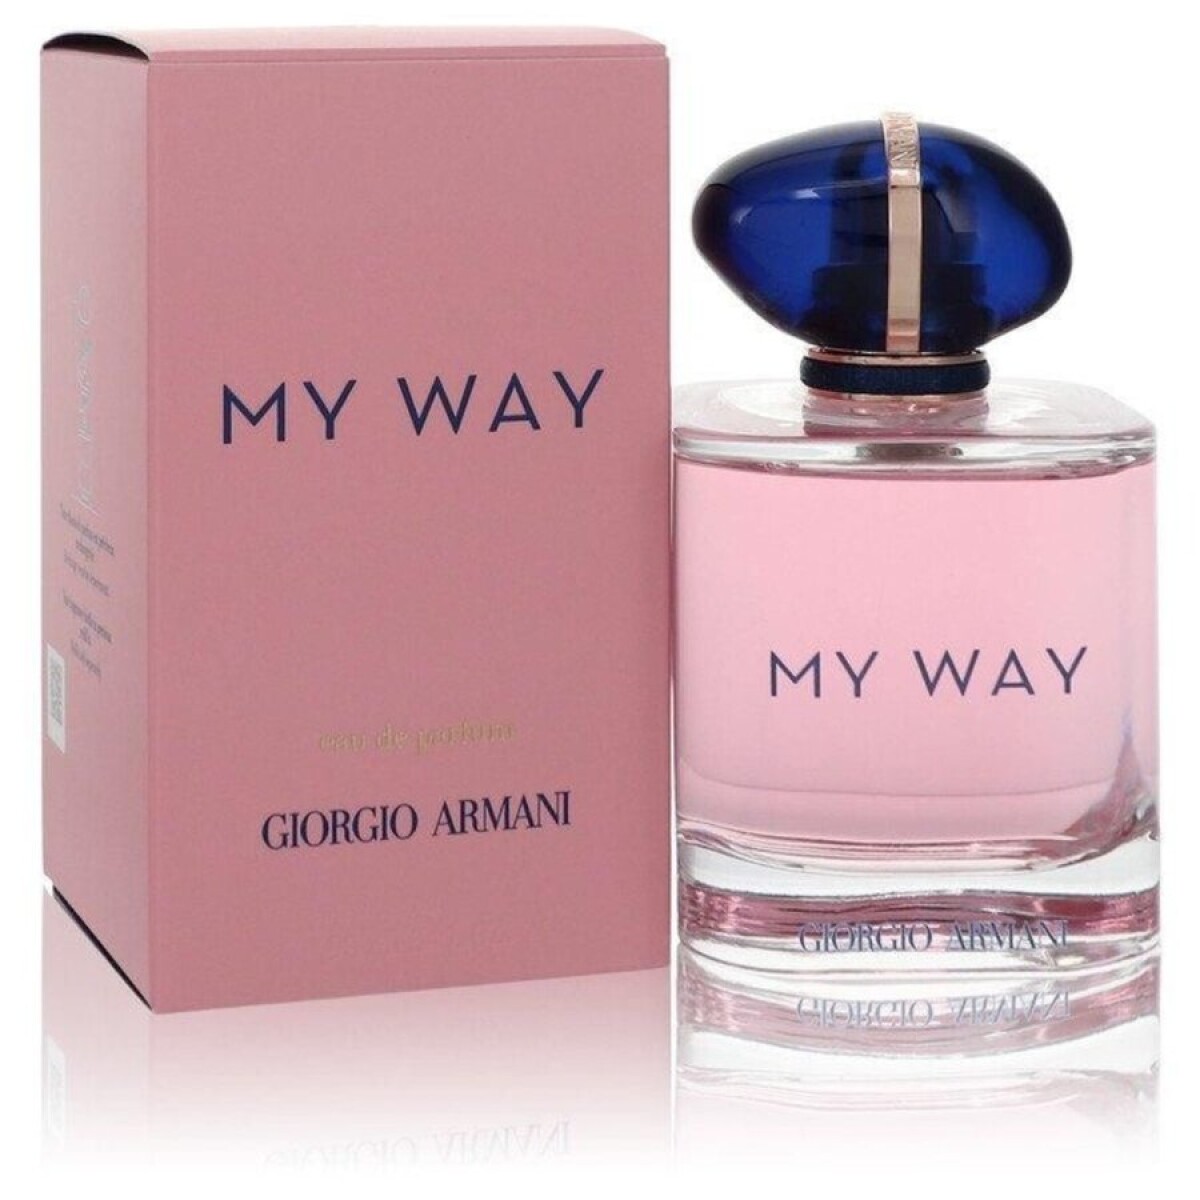 Perfume Giorgio Armani My Way Edp 30 Ml - 001 